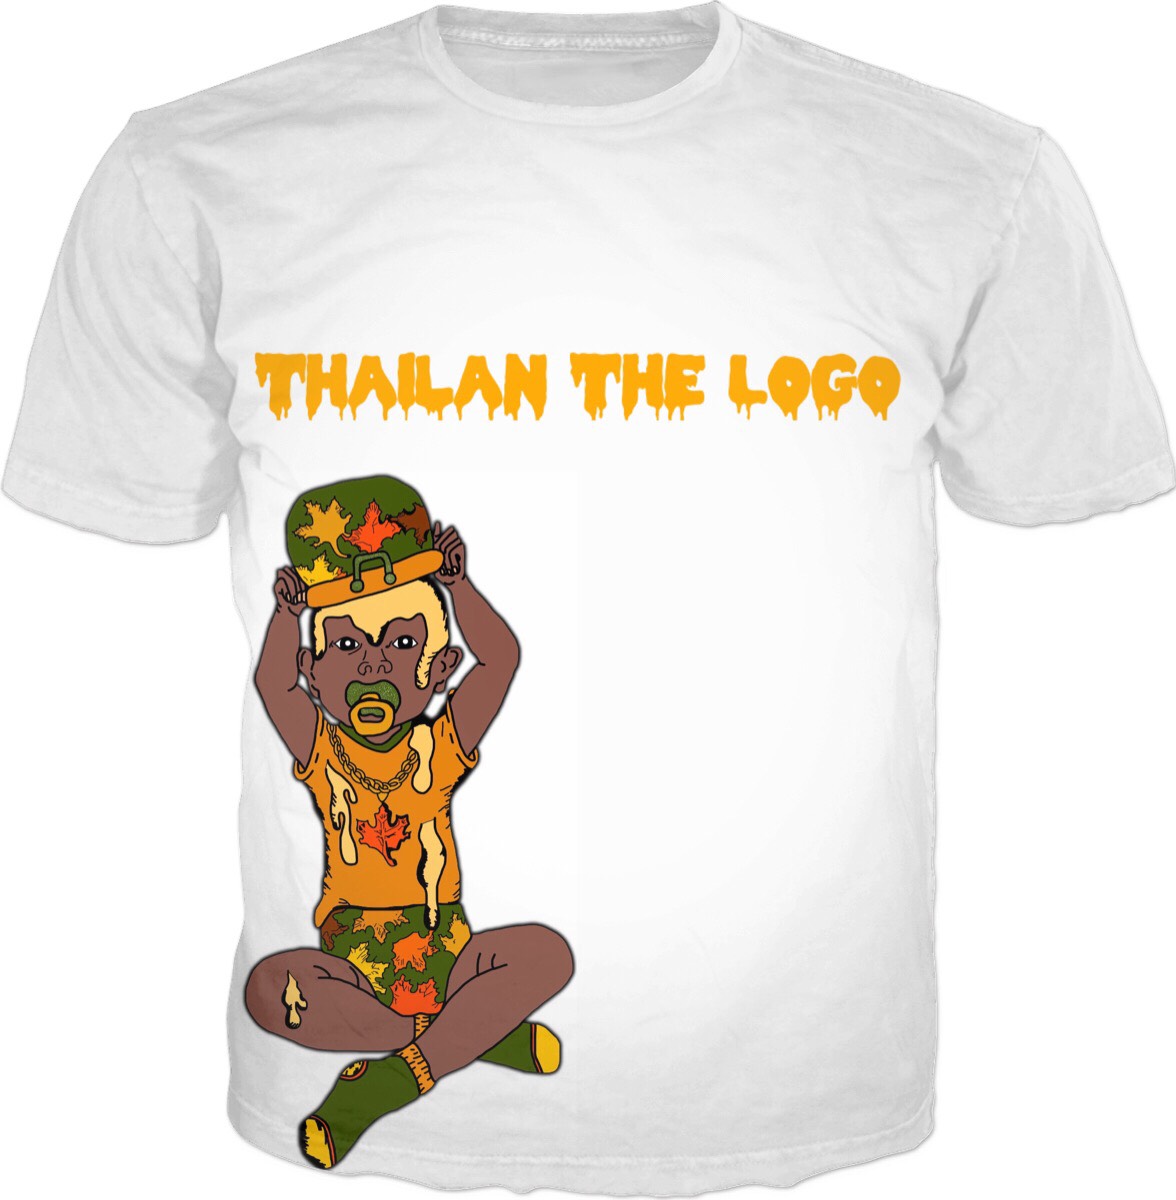 Thailan The Logo Shirt